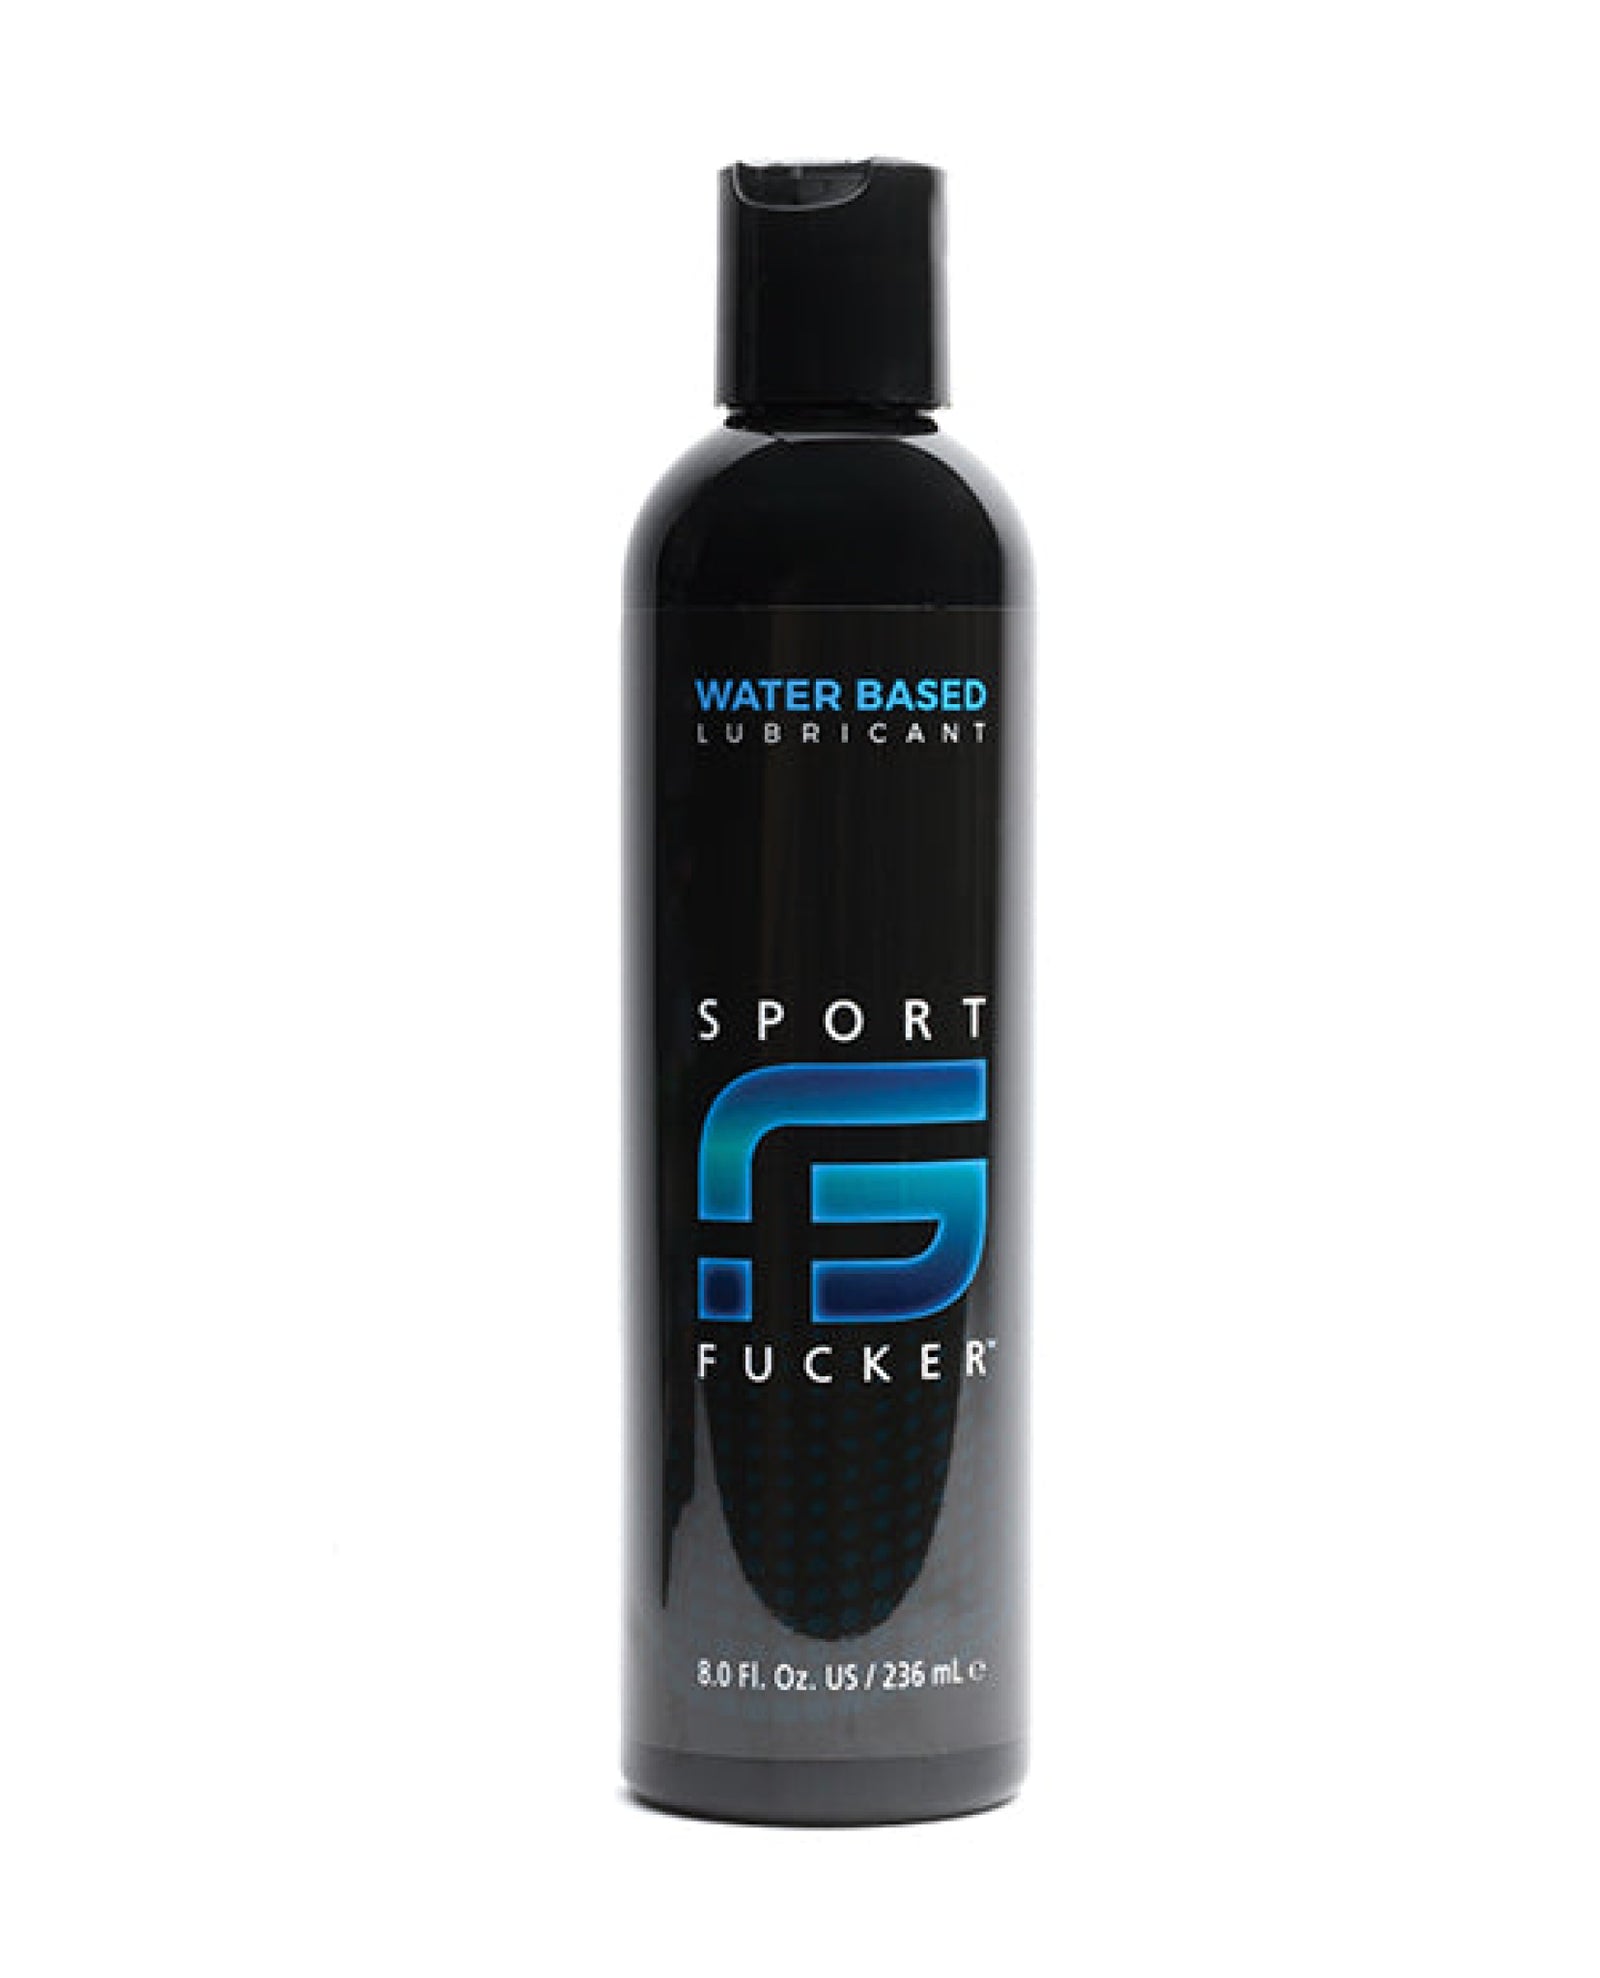 Sport Fucker Water Based Lubricant - 8 oz 665 INC